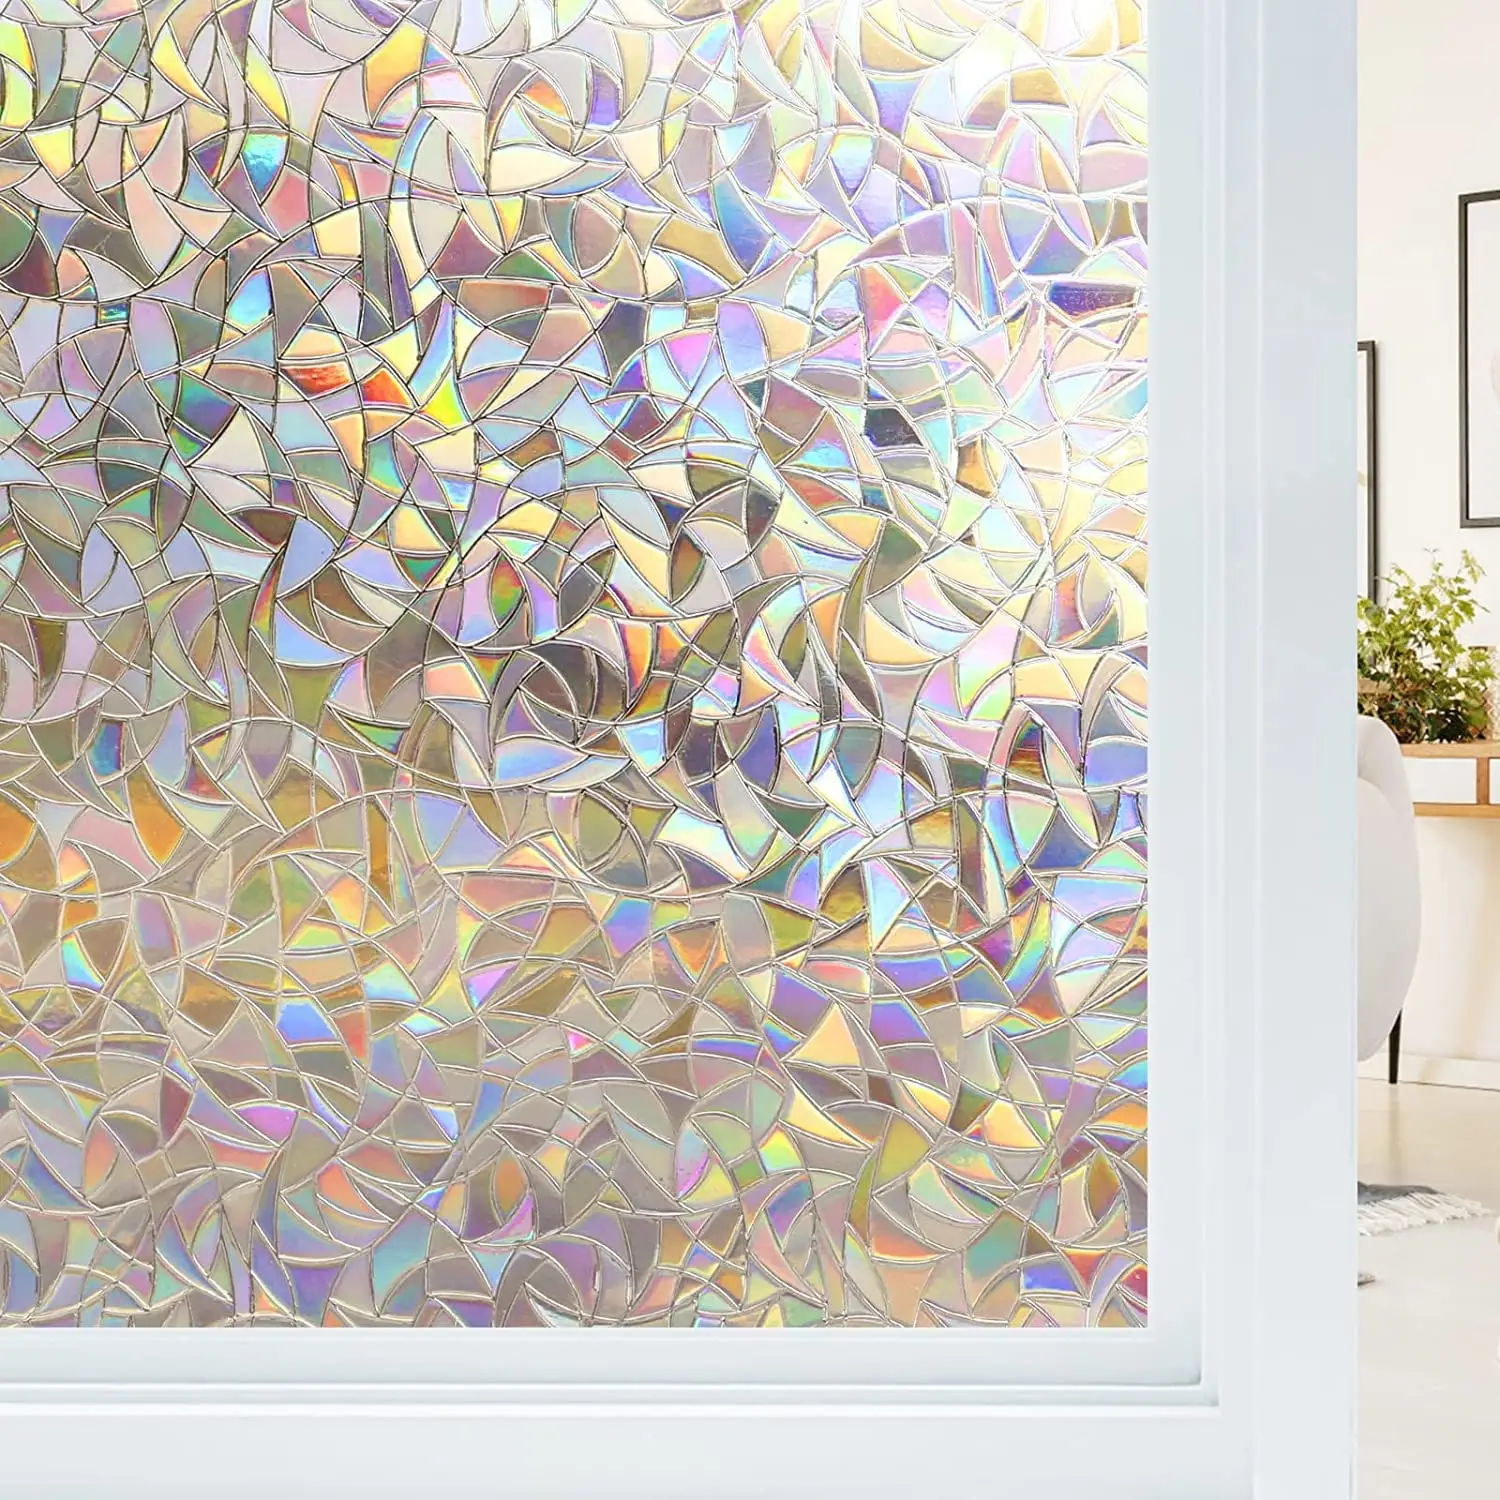 ARTISAN Rainbow Dekorative Fenster folie Datenschutz Glasmalerei Vinyl Selbst klebende Folie Static Cling Insulation Fenster aufkleber